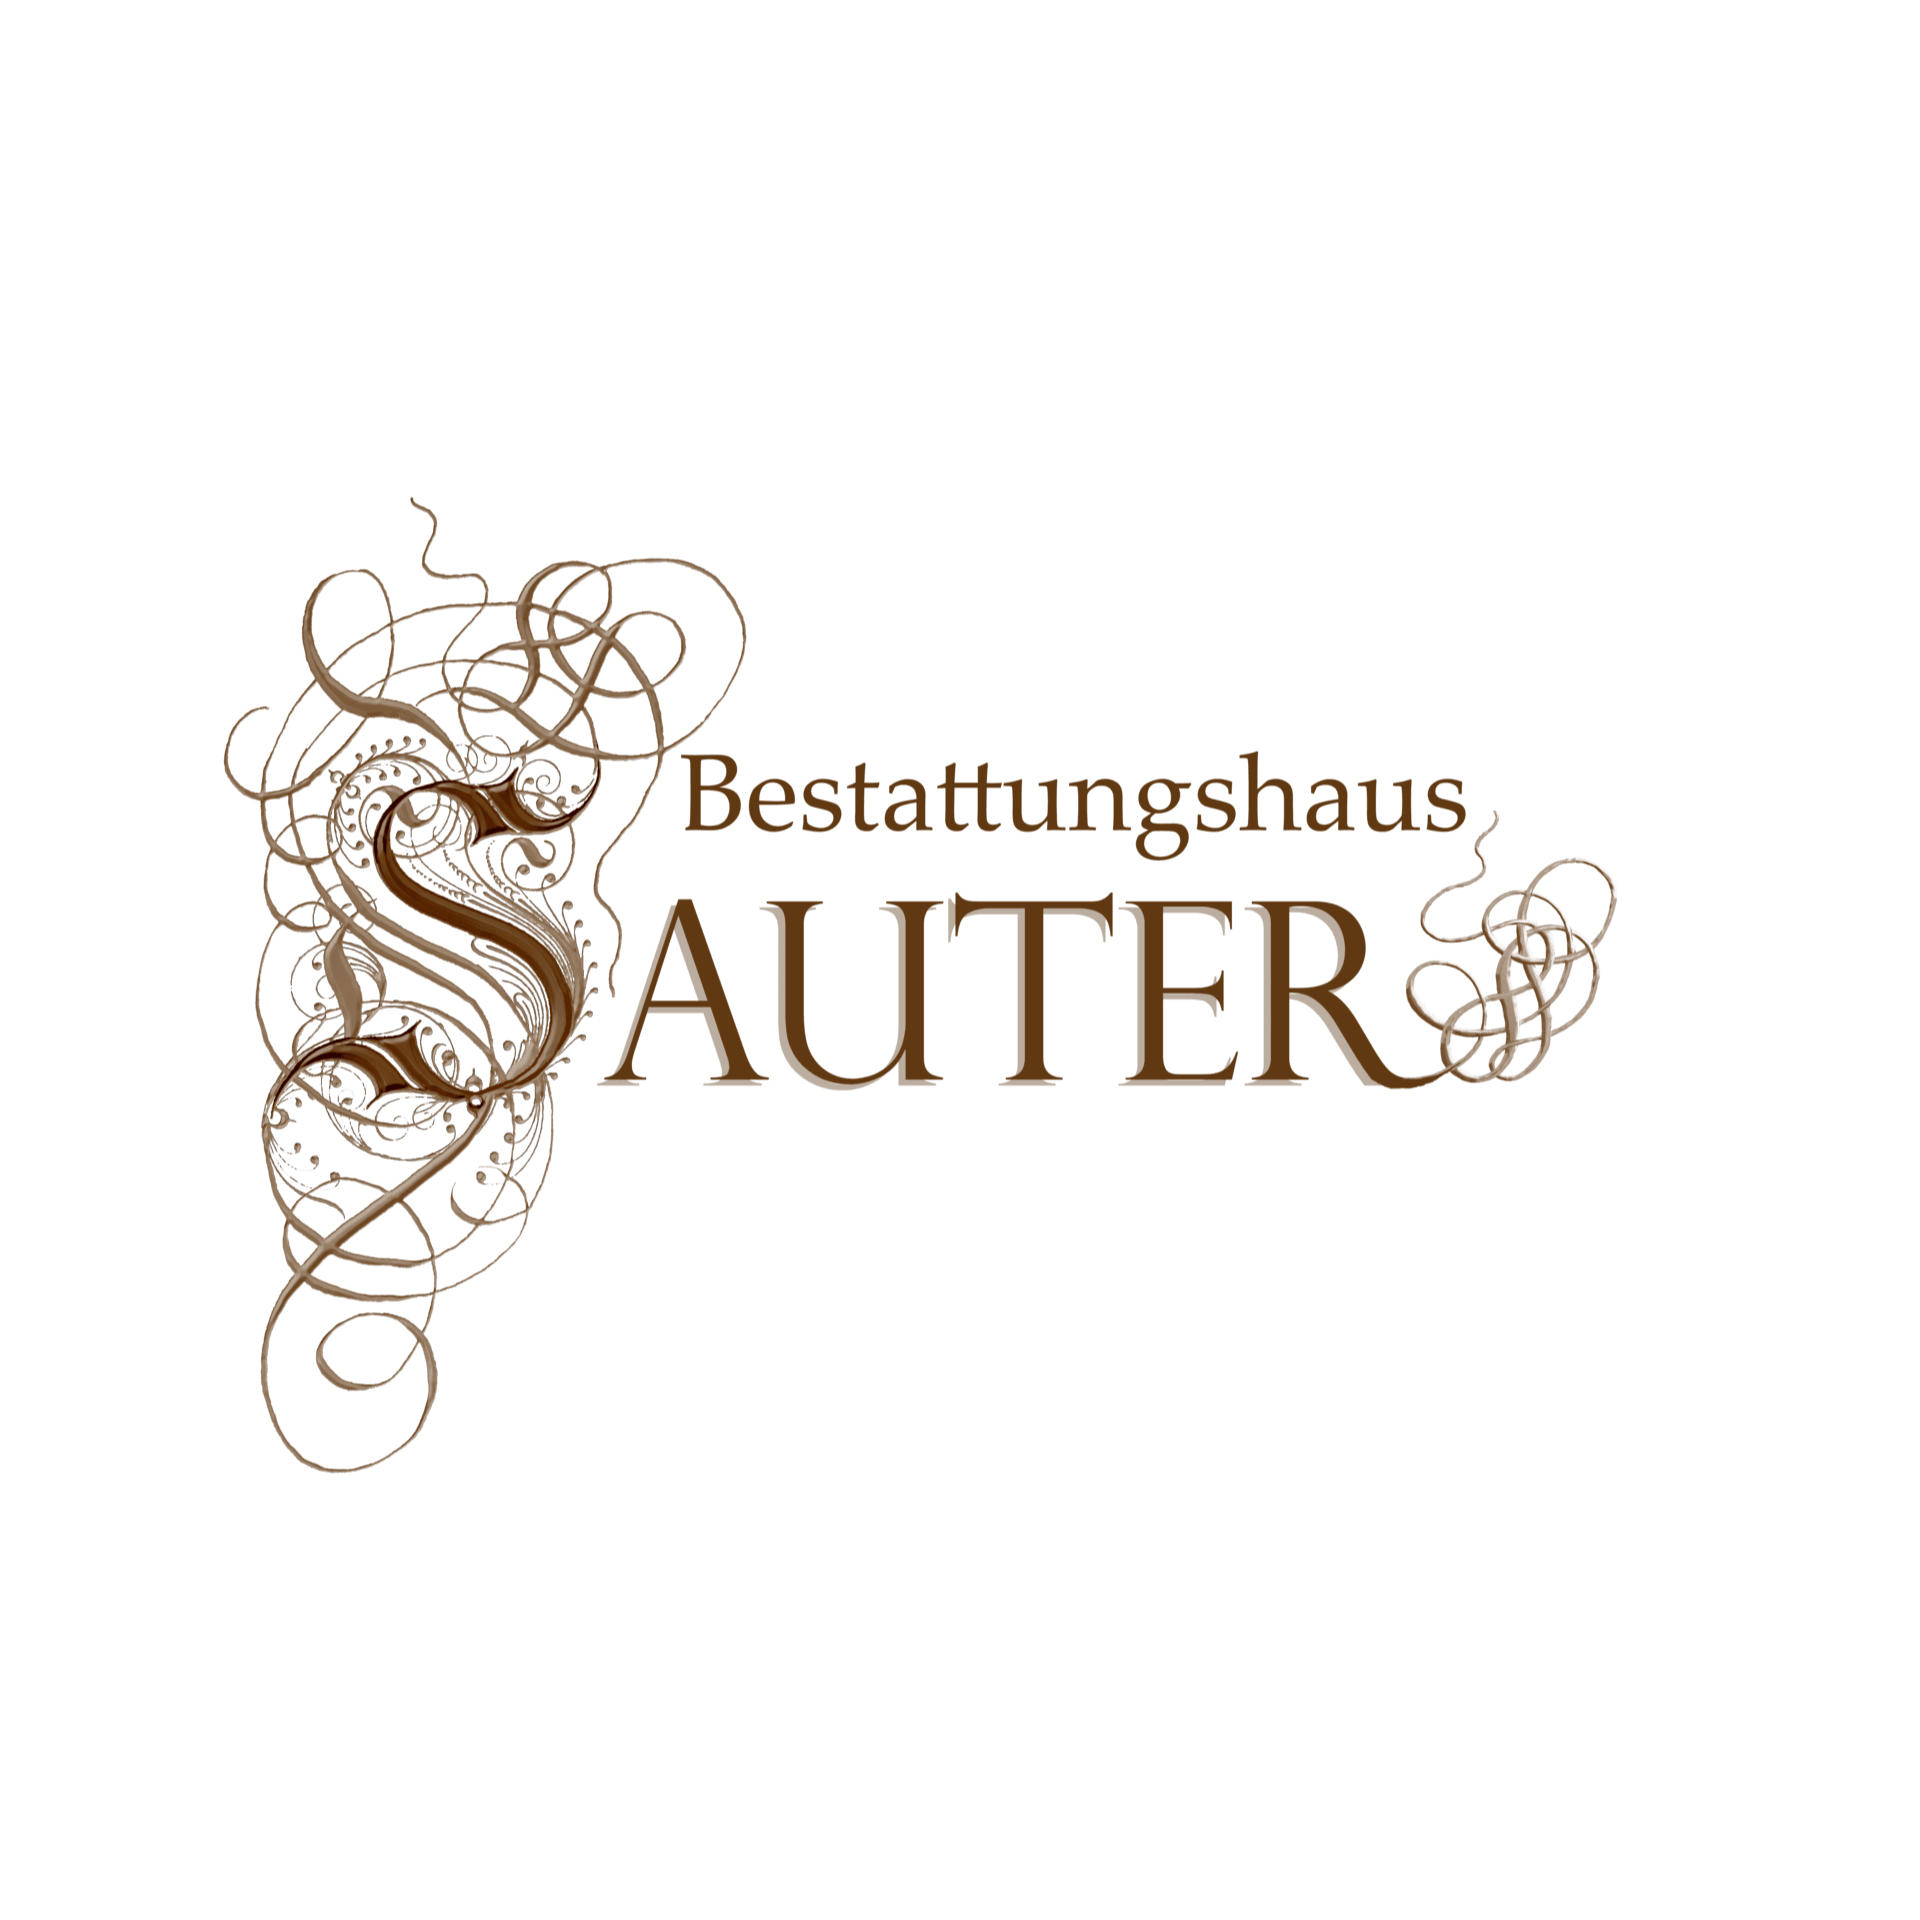 Bestattungshaus Sauter in Adelsheim - Logo